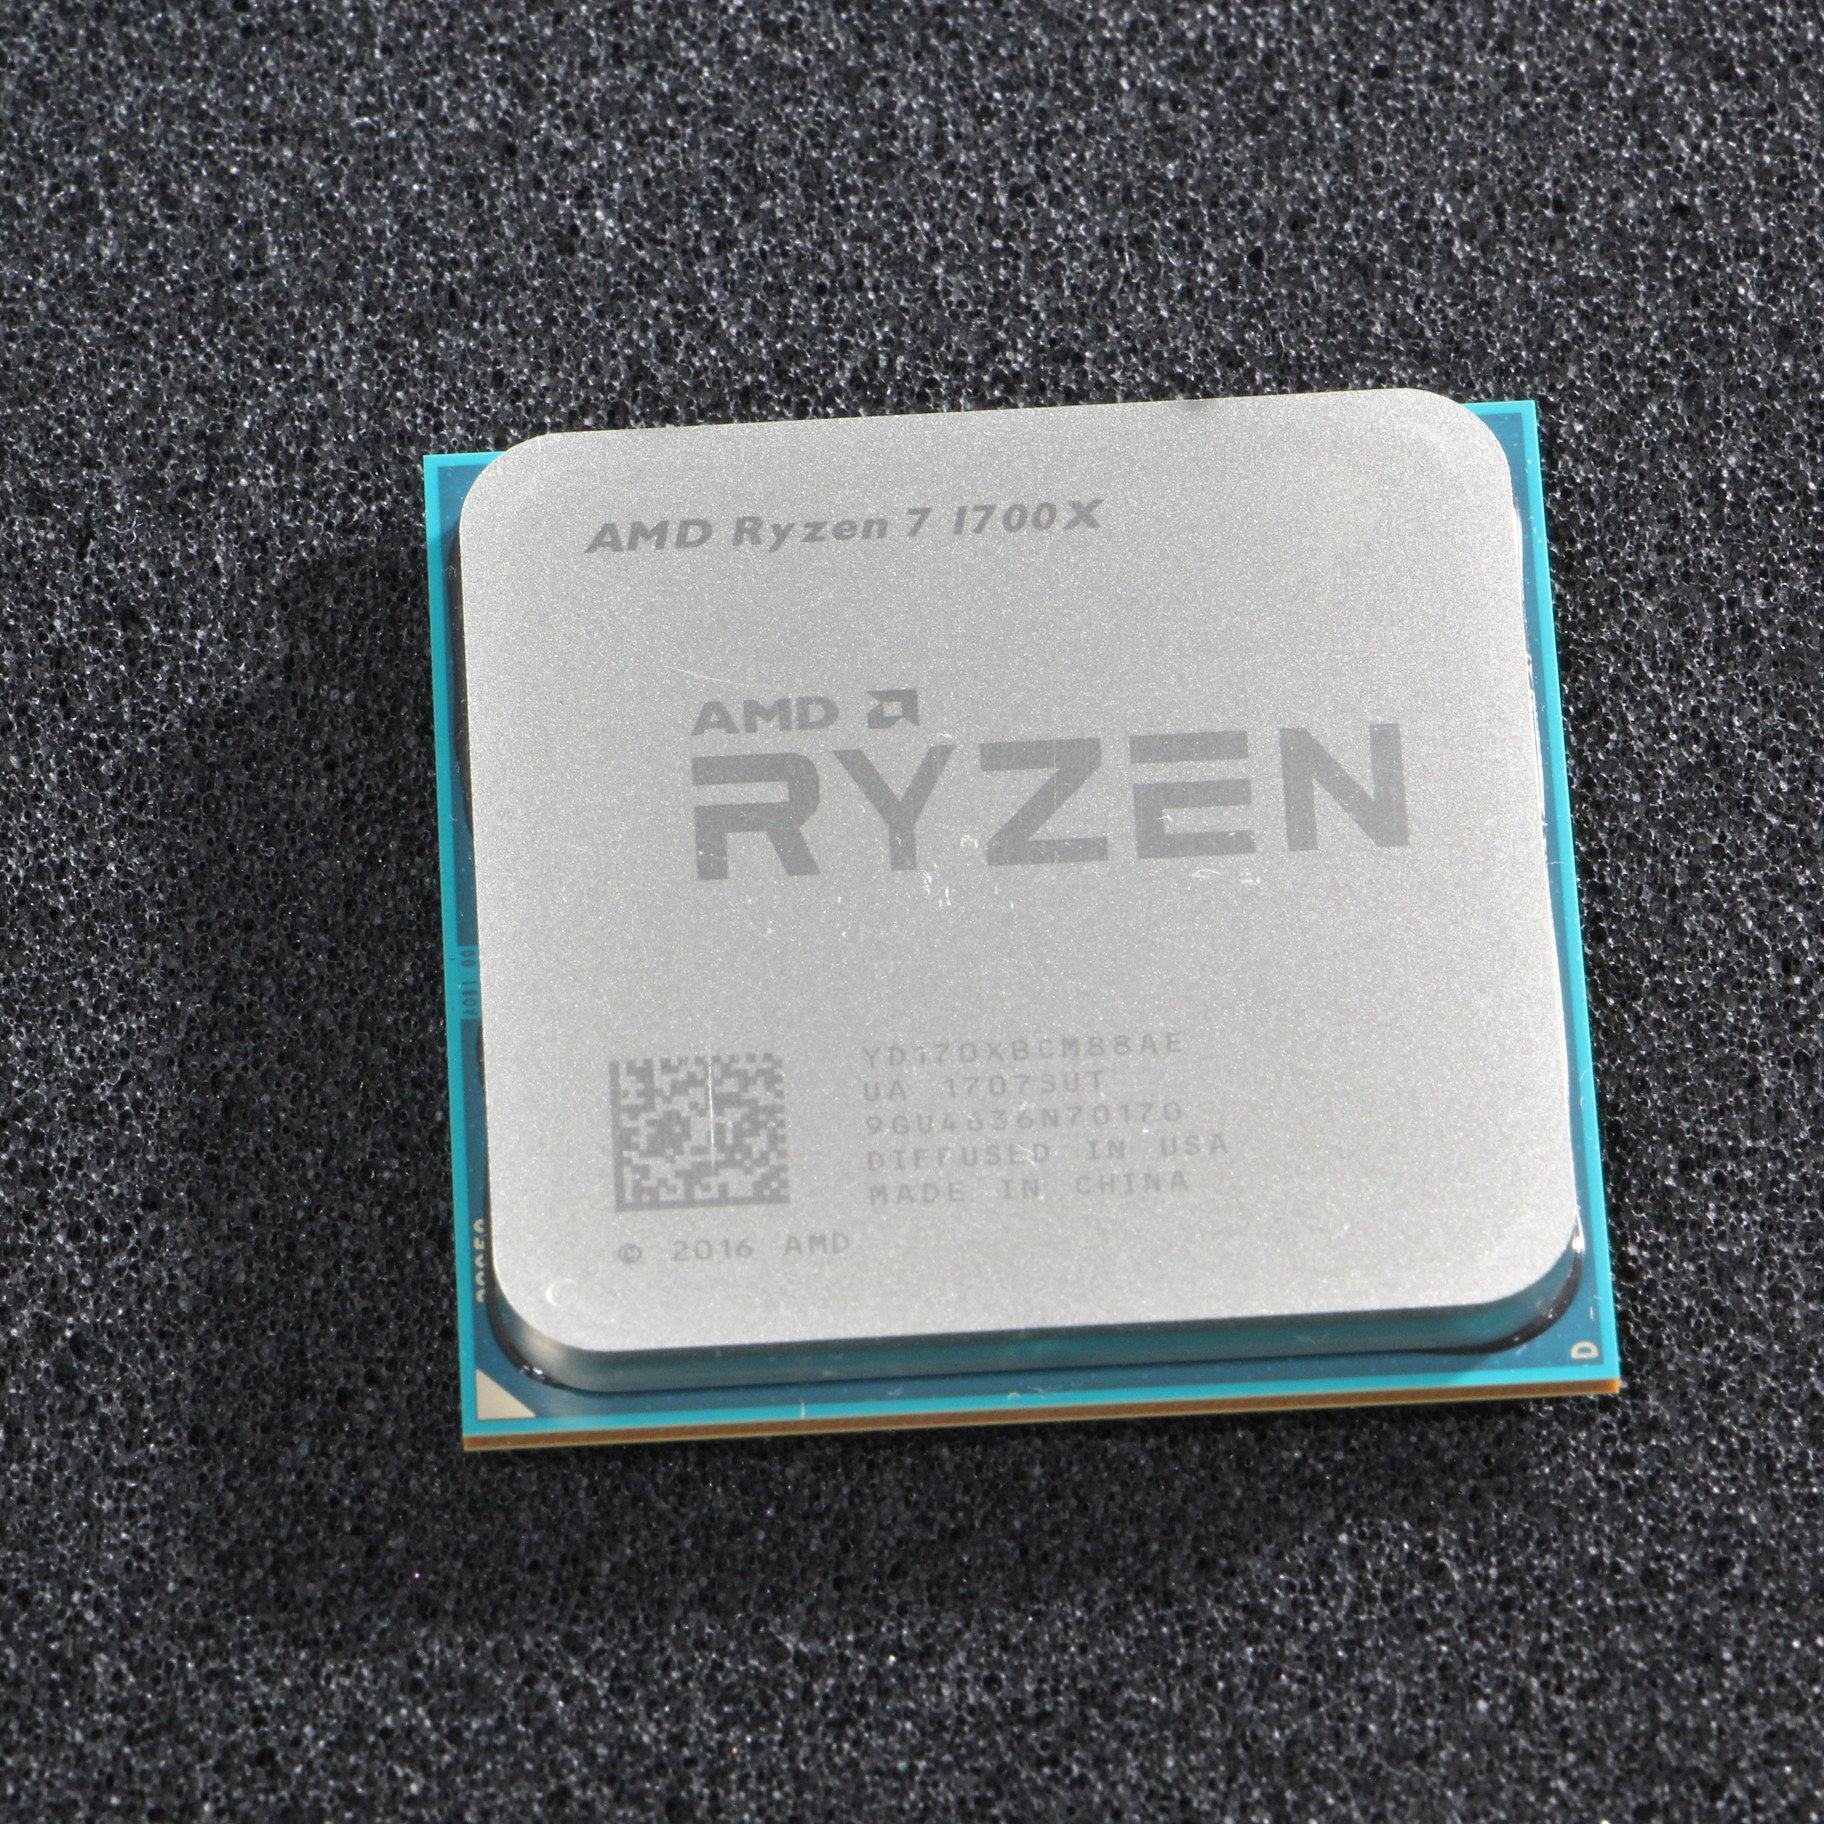 Ryzen7 1700x